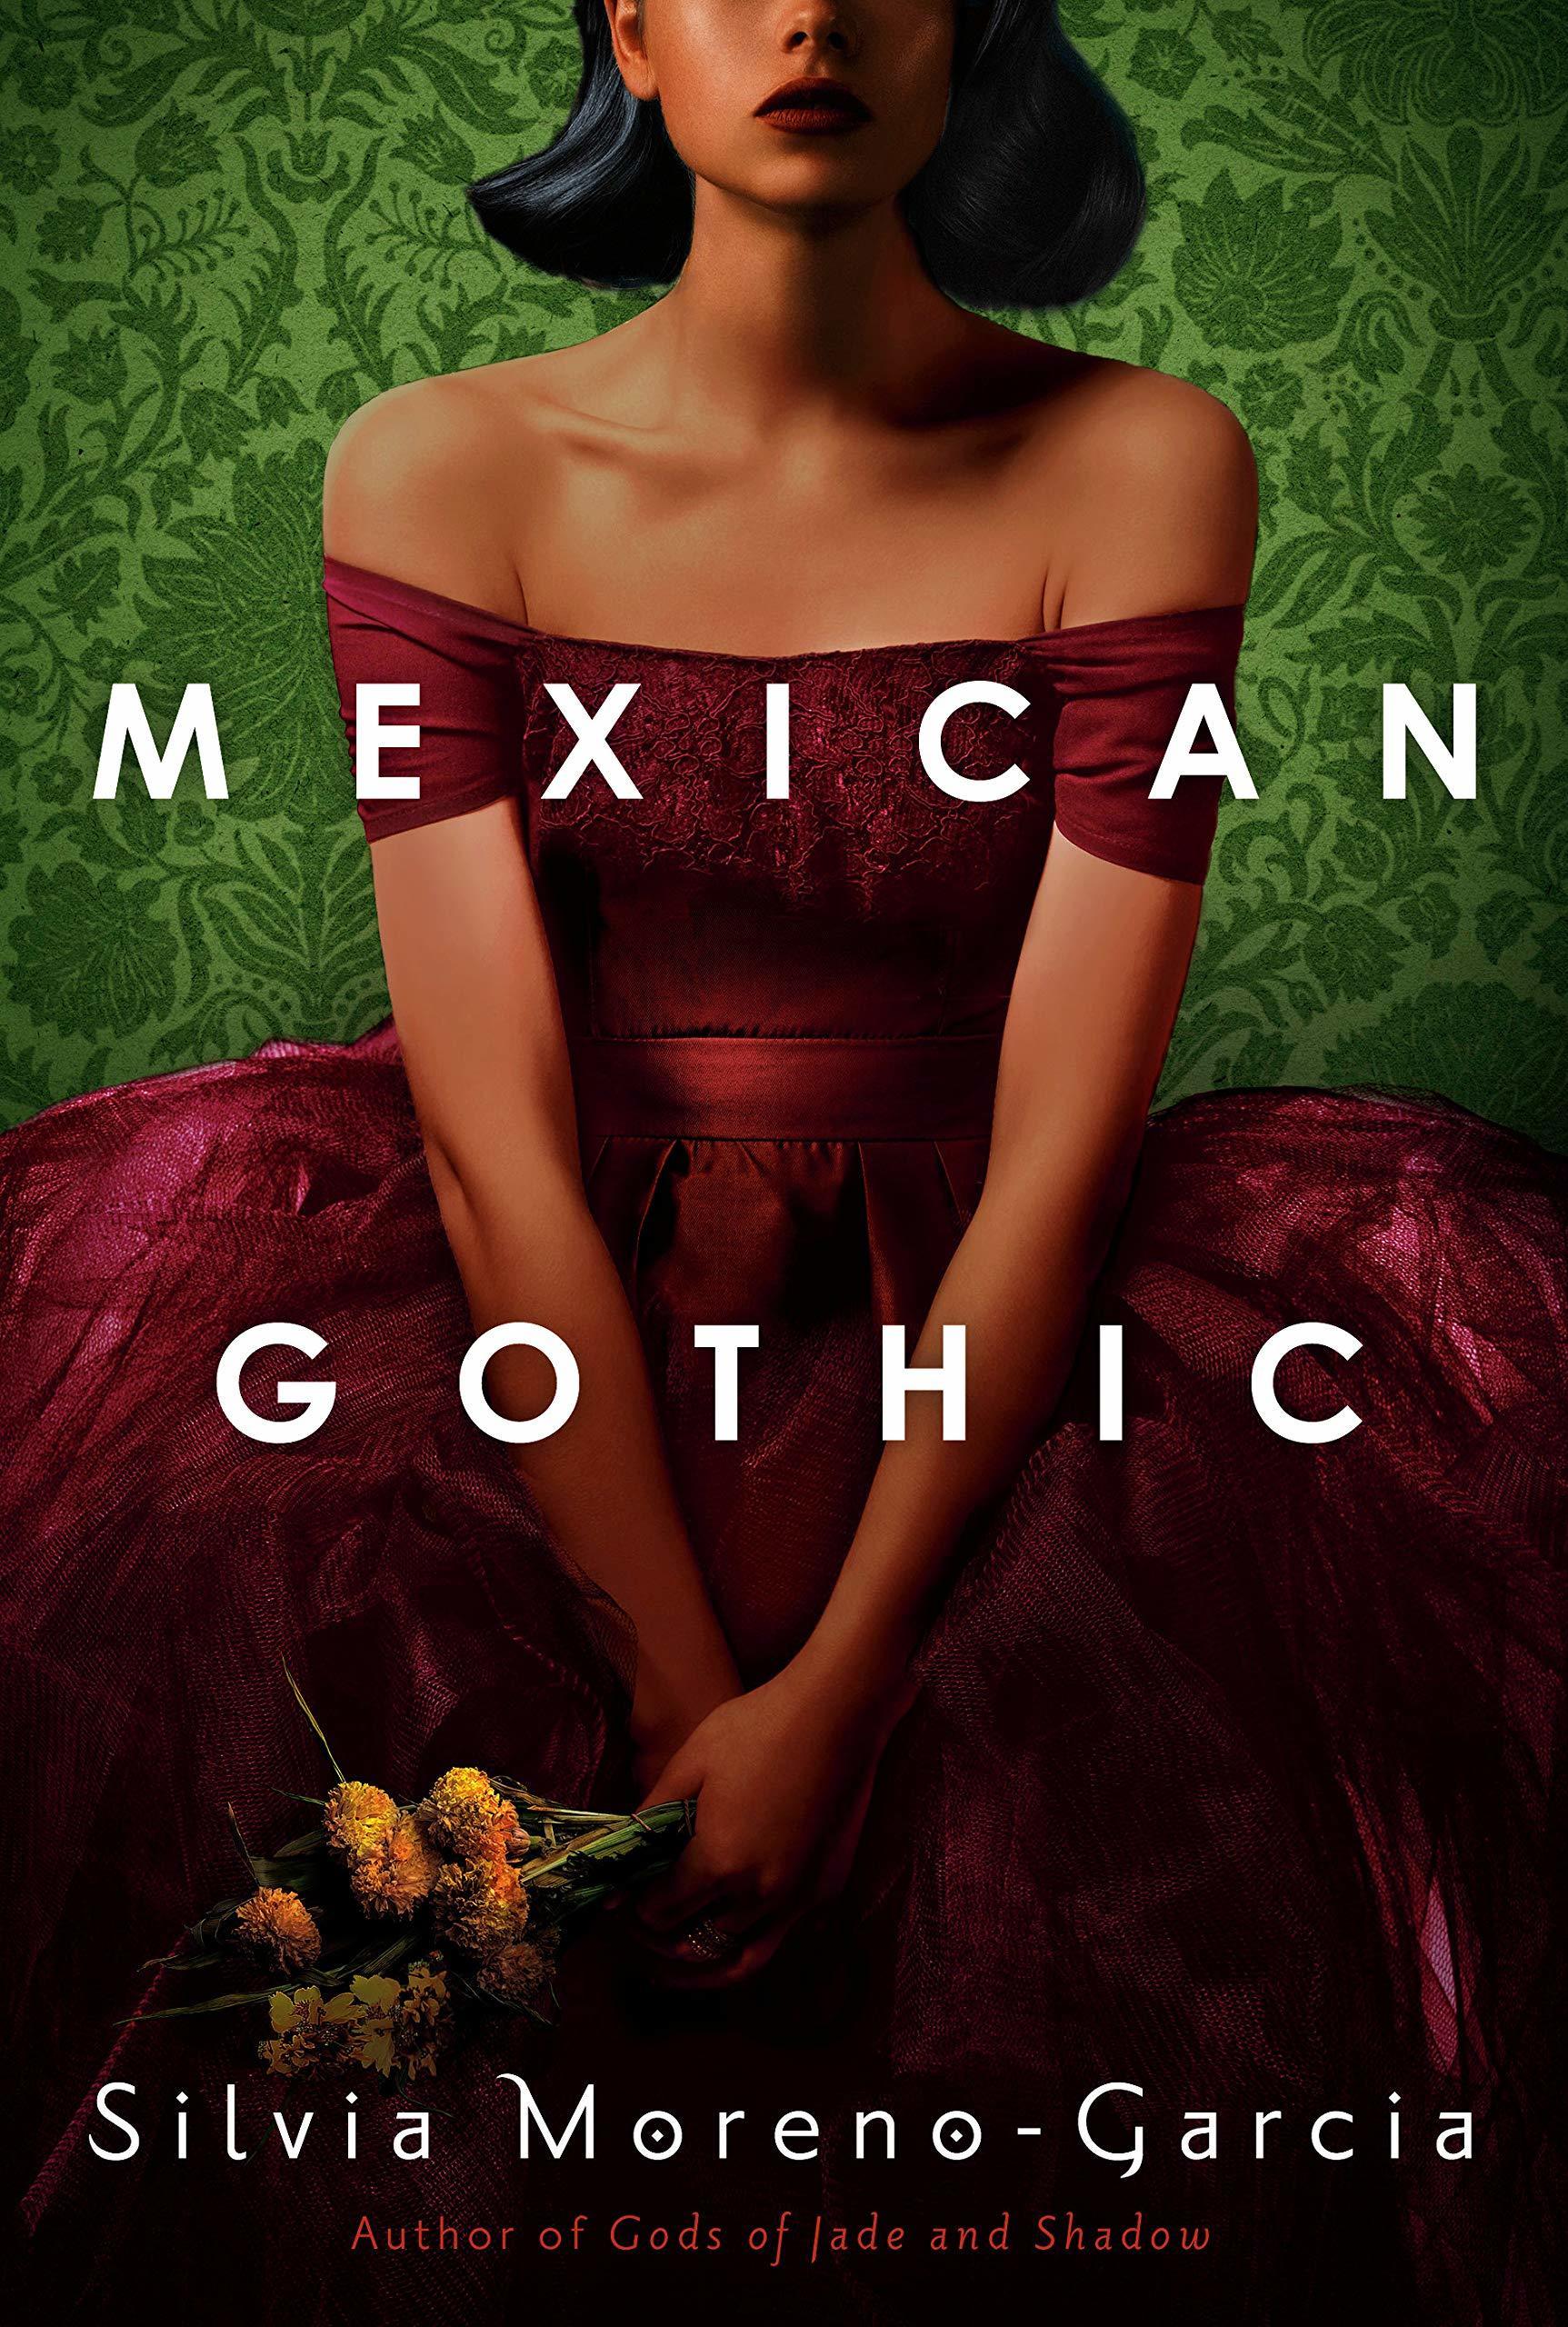 Book Review: MEXICAN GOTHIC by Silvia Moreno-Garcia